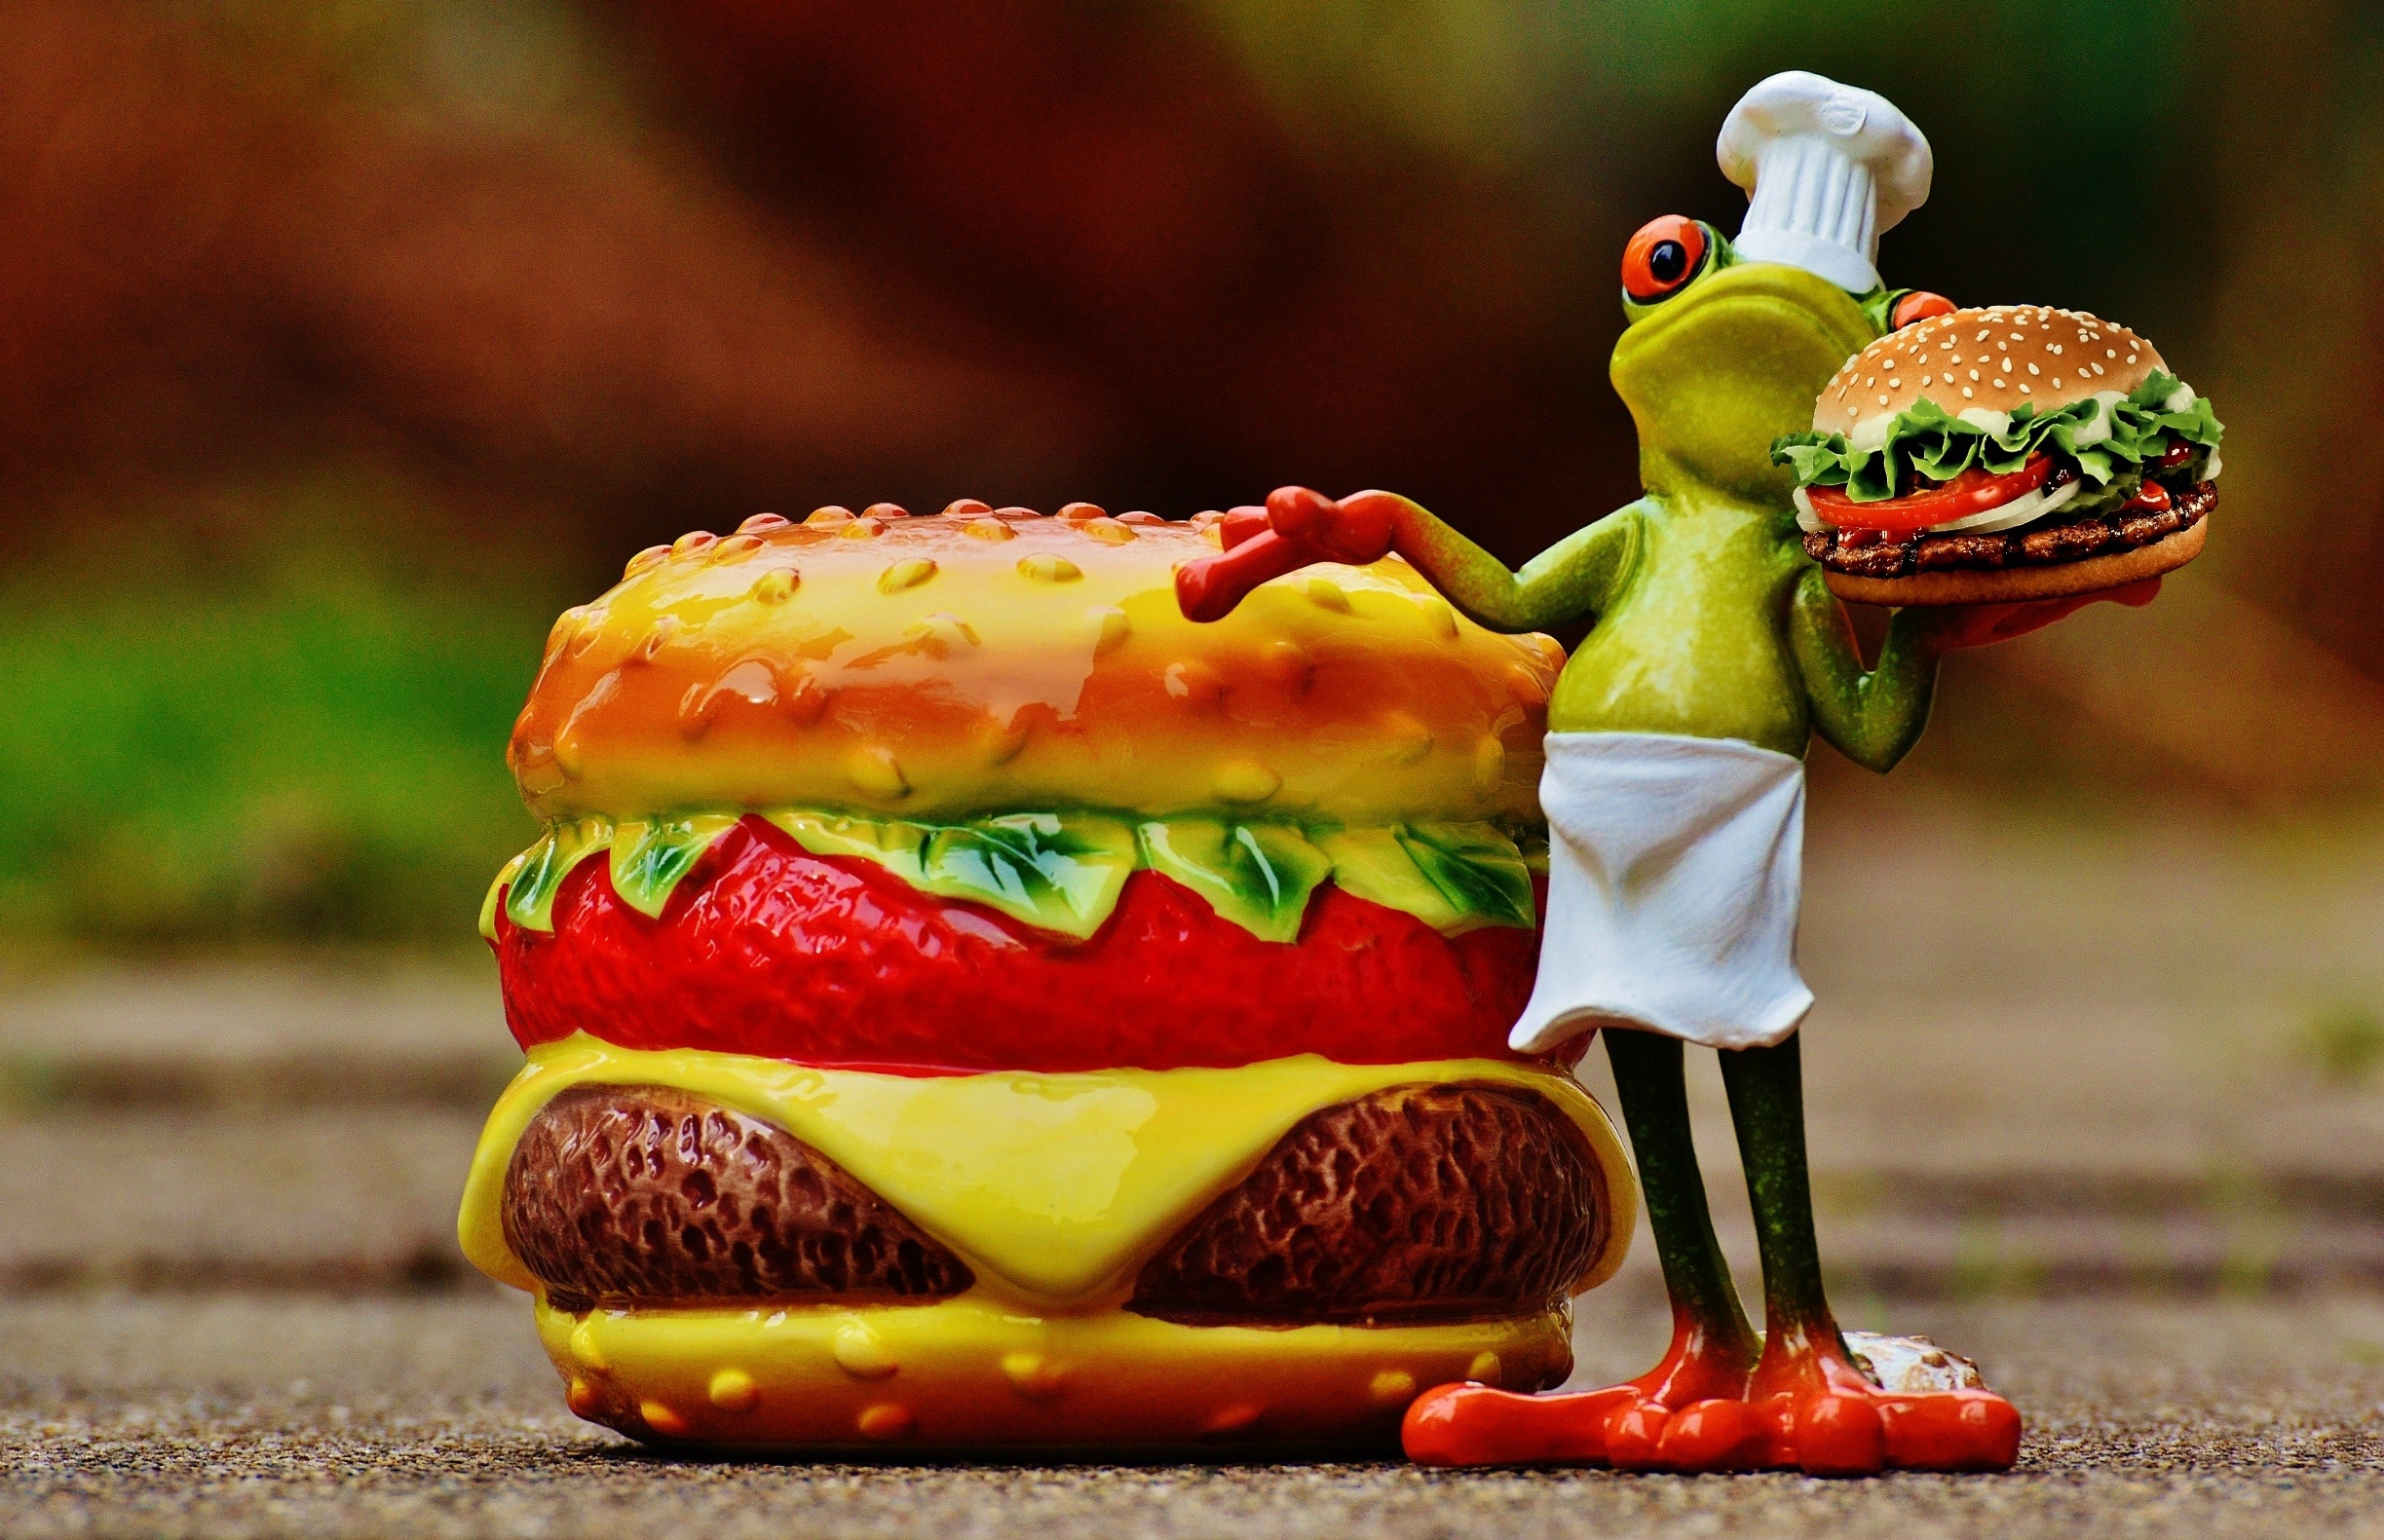 Hamburger, Frog, Cheeseburger, Cooking, food and drink, vegetable